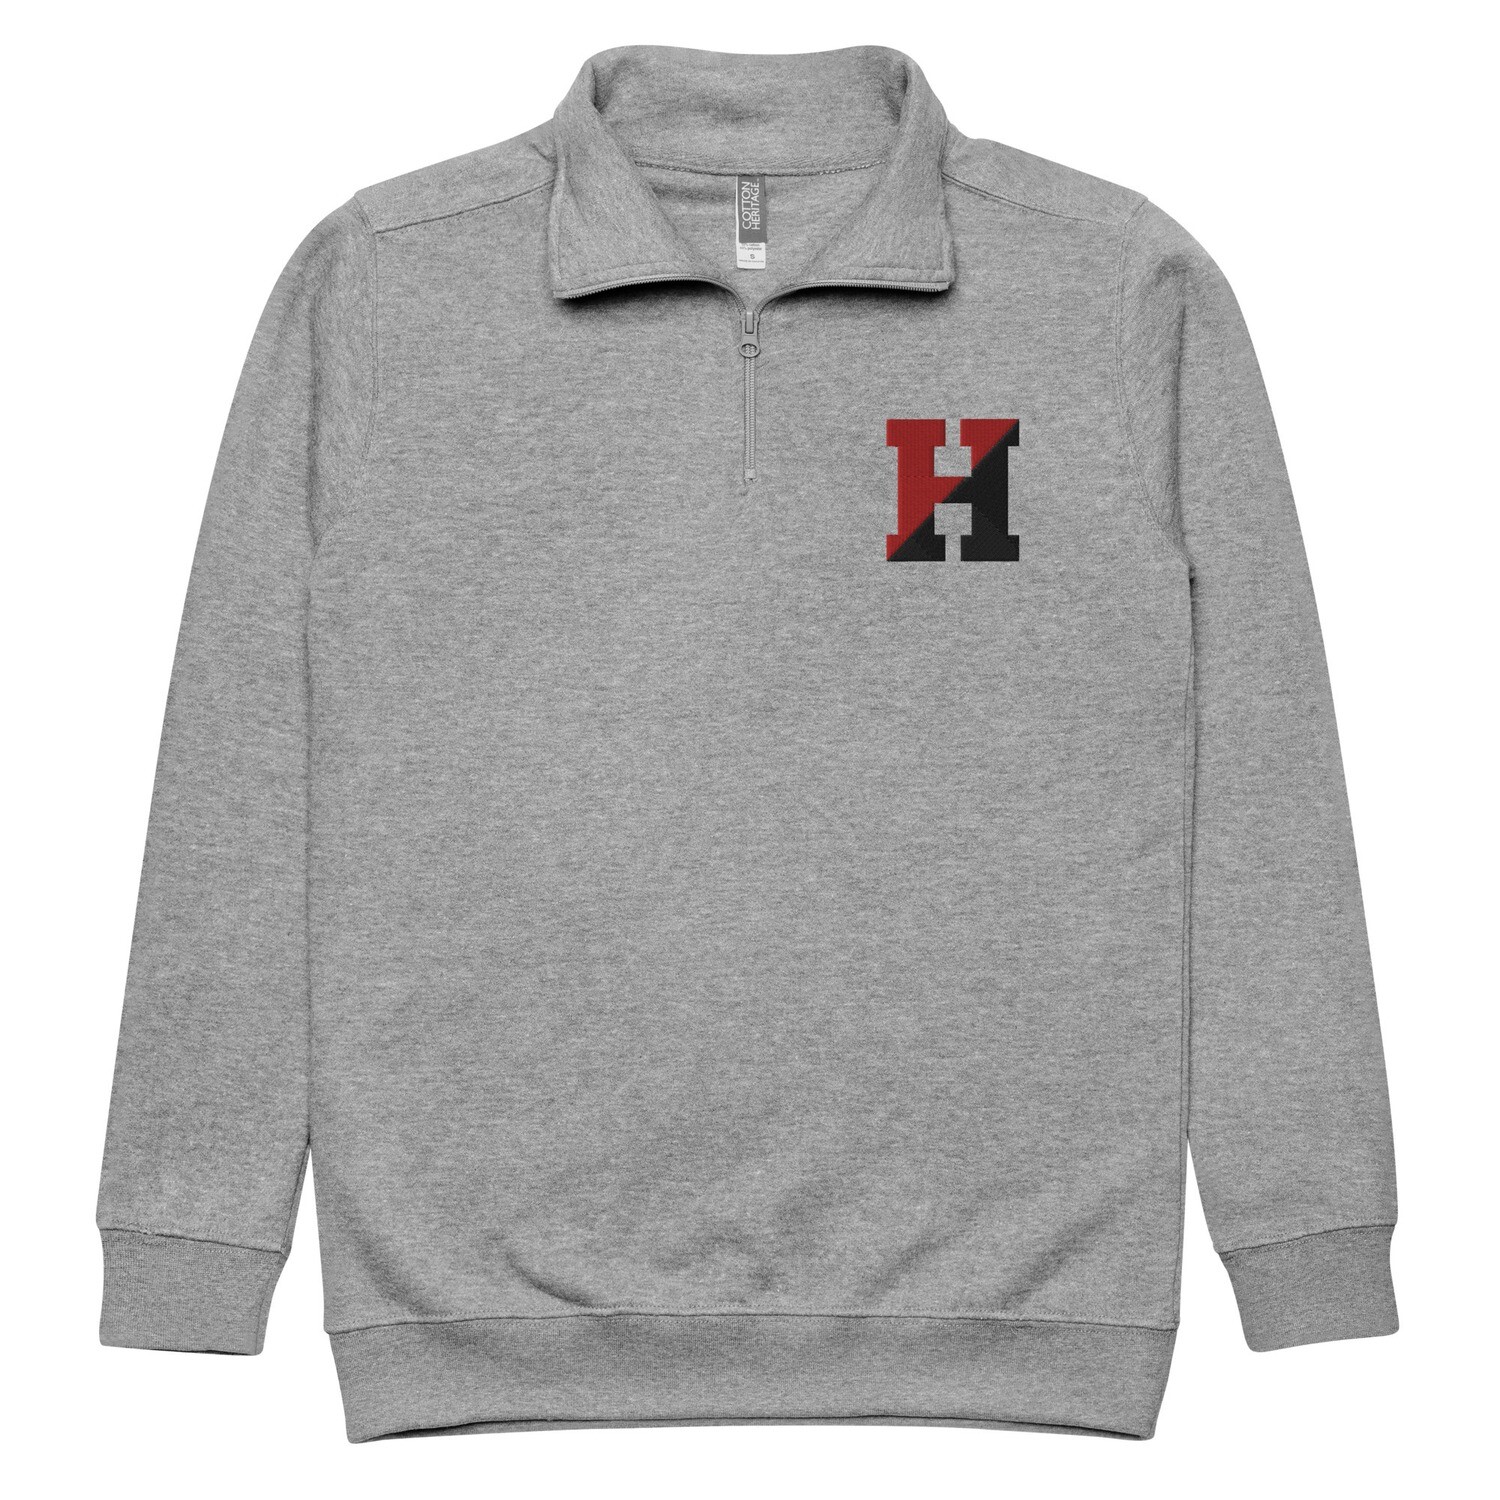 Hempfield "The H" Embroidered Unisex fleece pullover